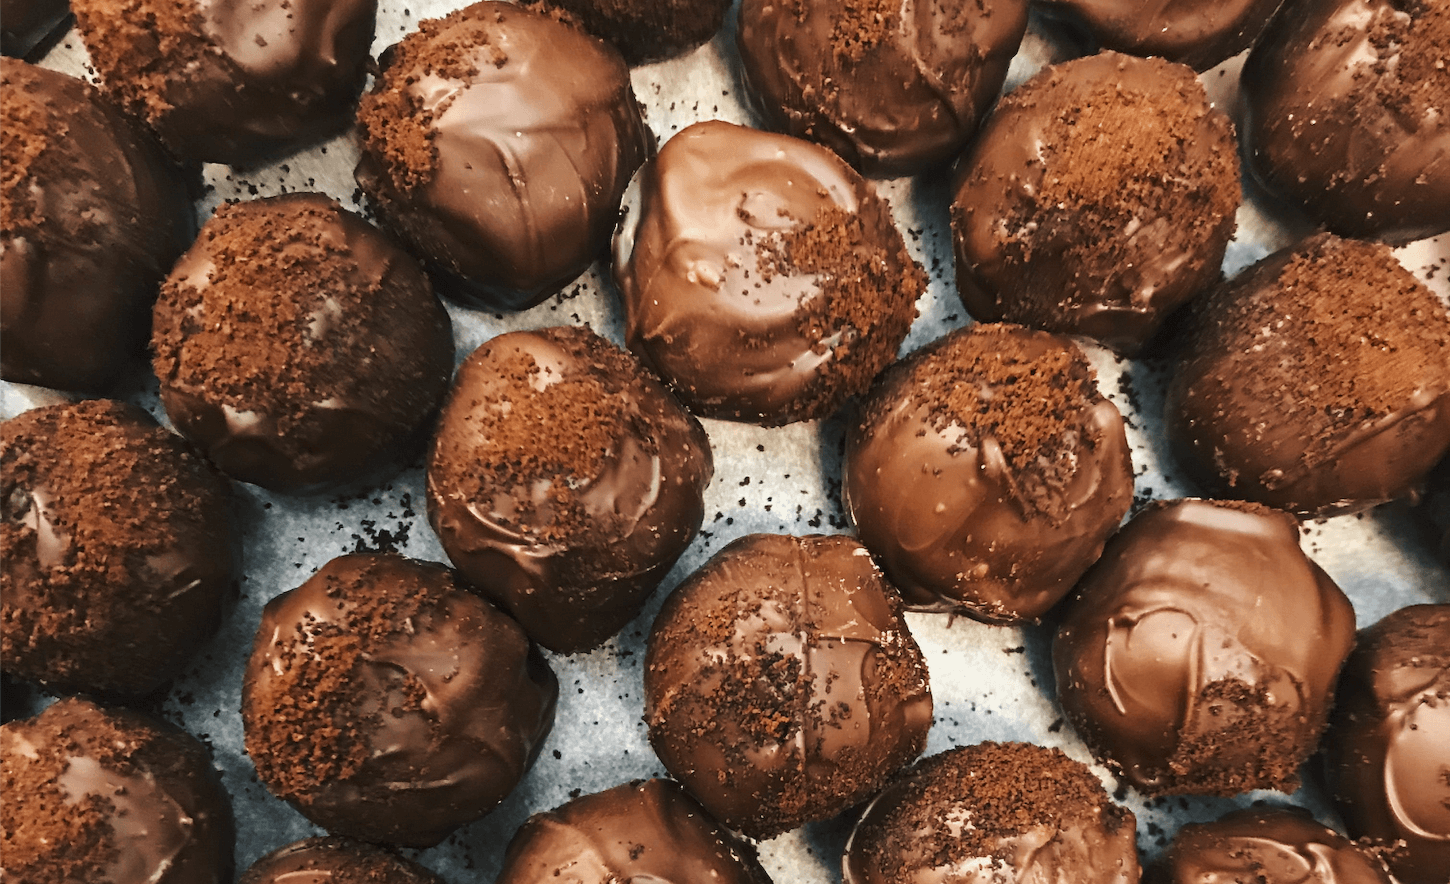 Rows of chocolate truffles